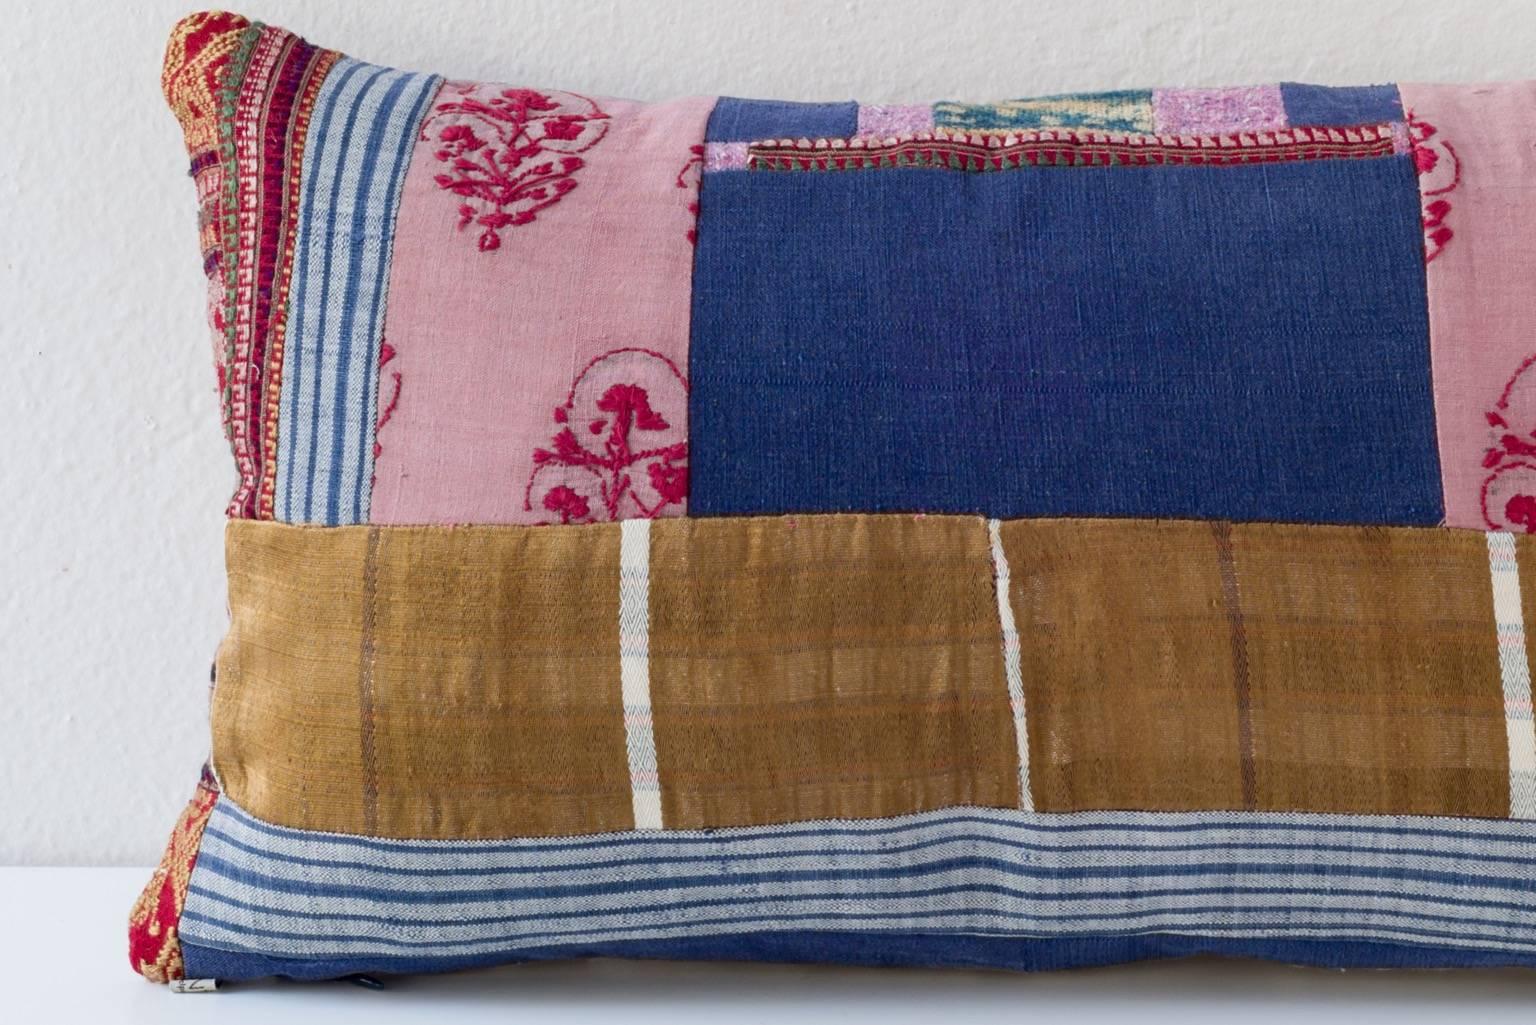 Asian Ethnographic Textile Piecework Lumbar Pillow in Indigo, Gold, Red and Pink